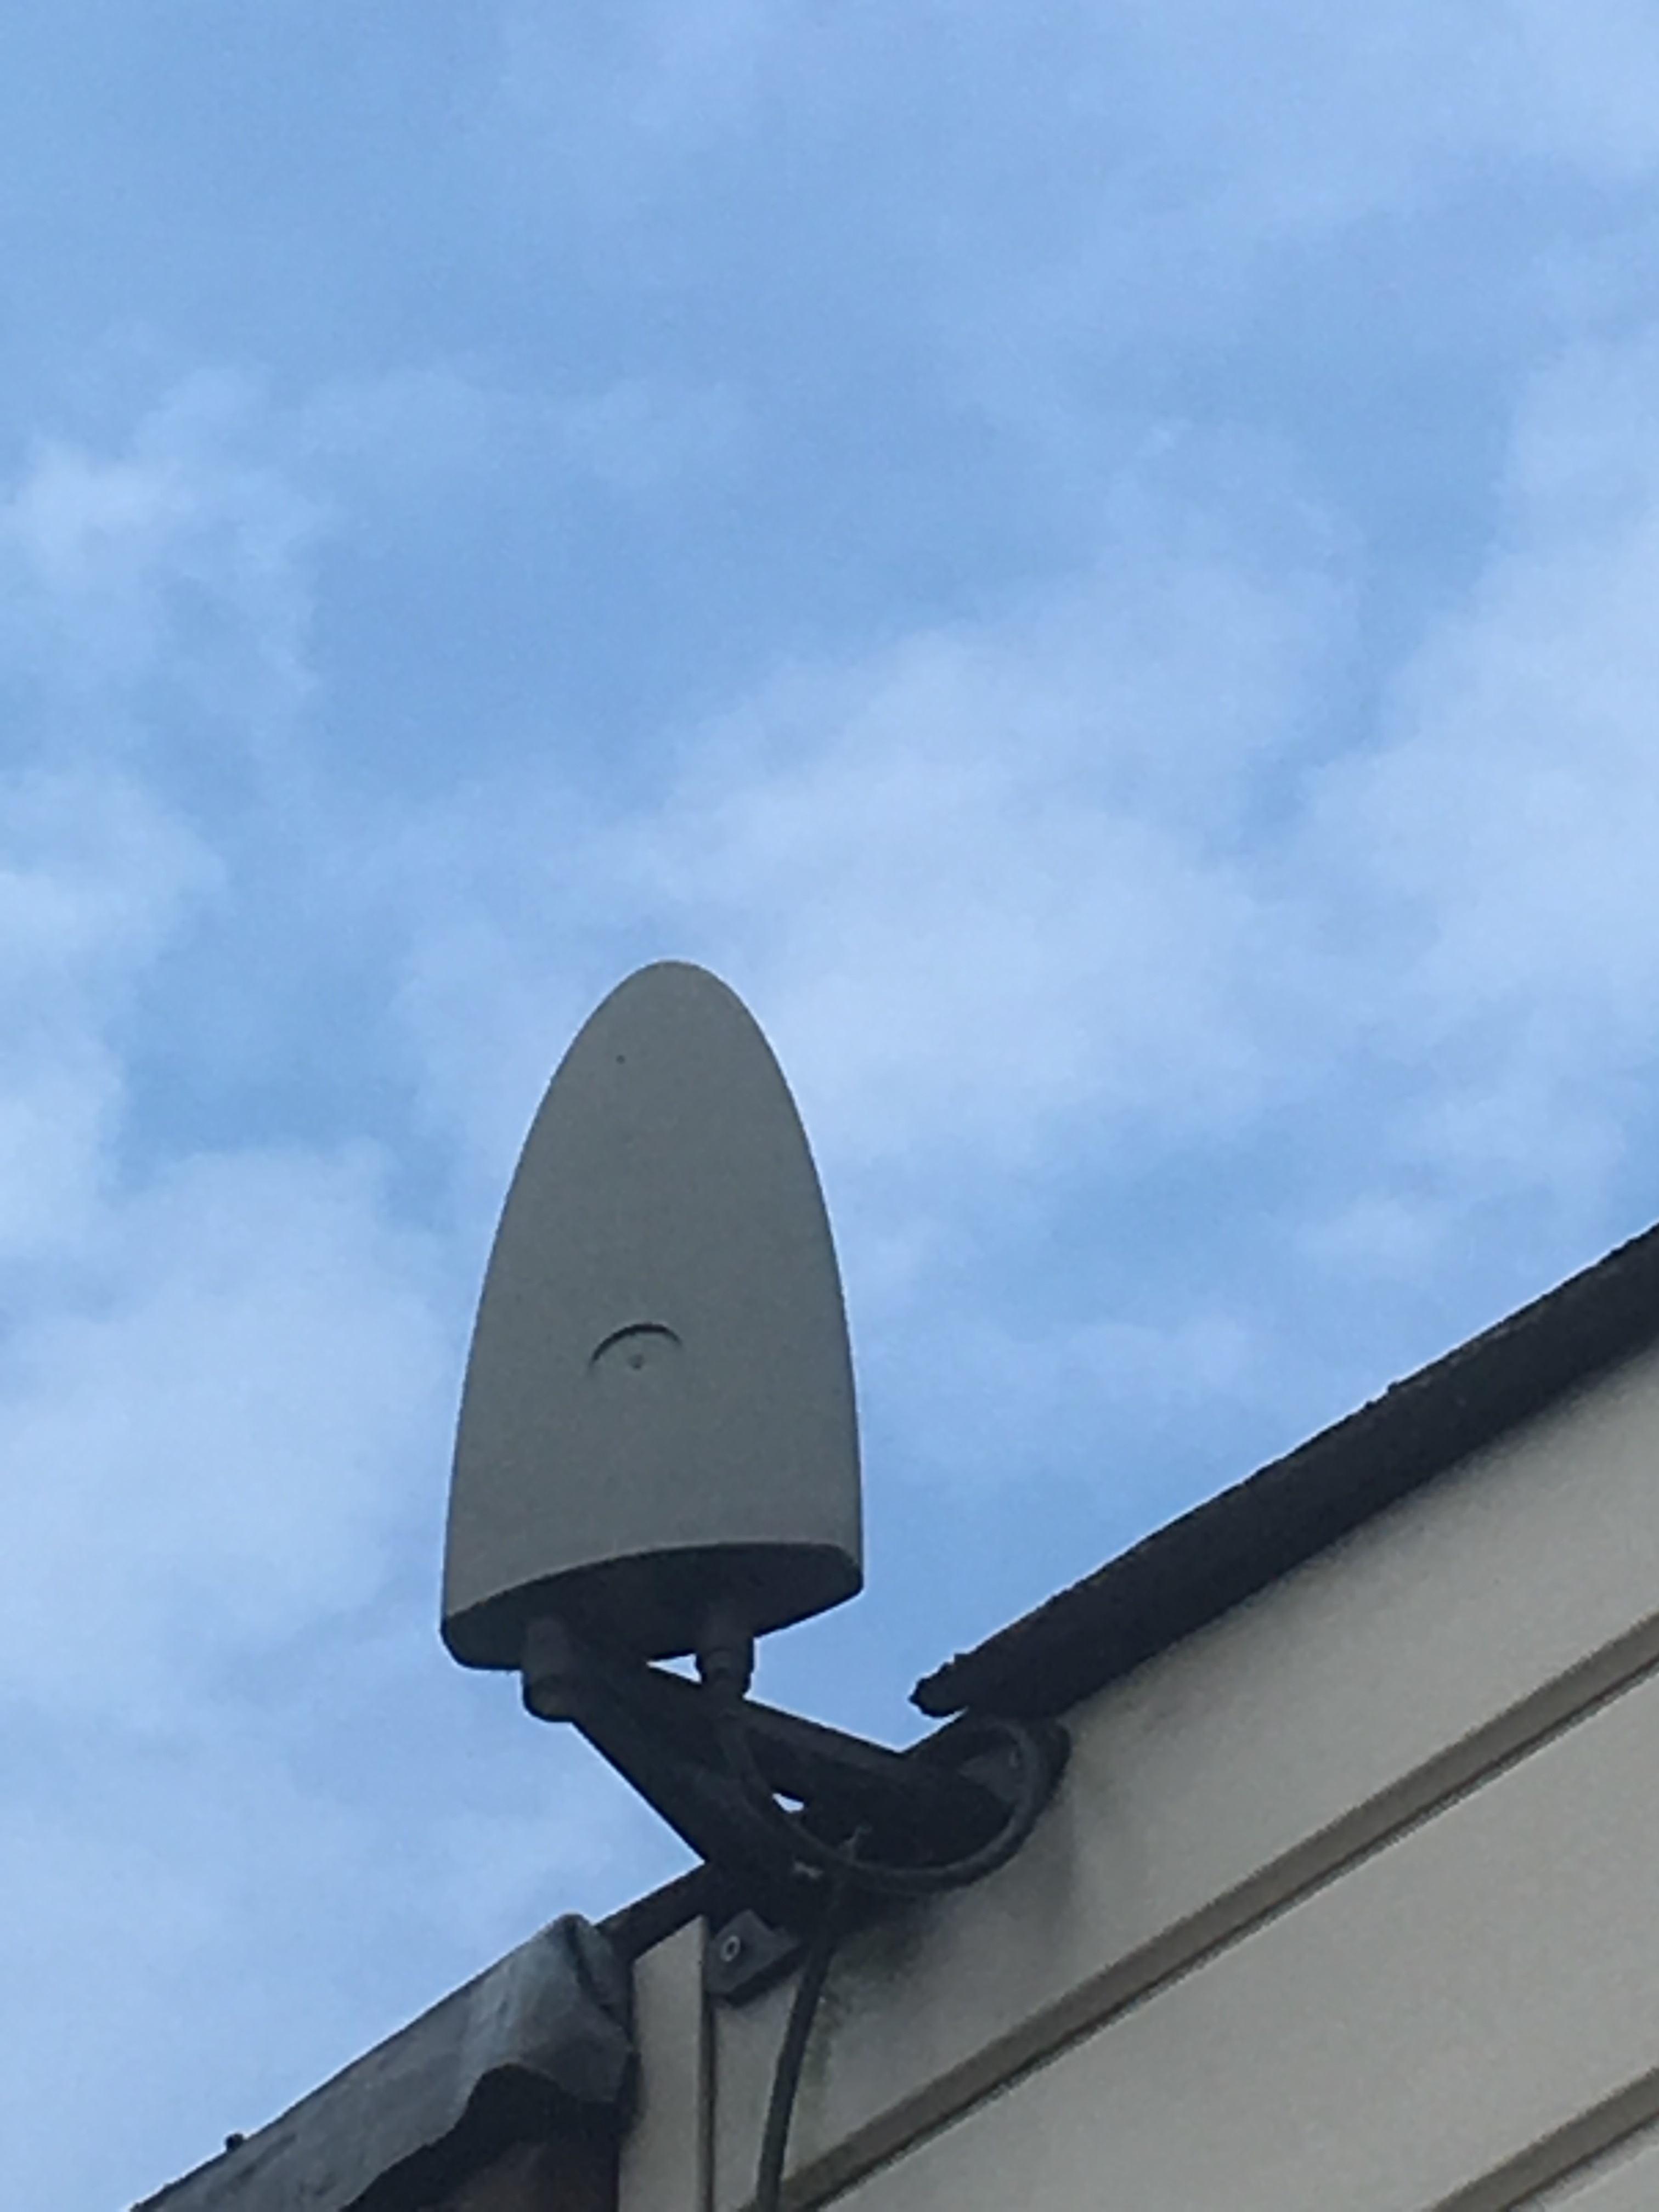 Betere antenne nodig Digitenne? Er verschillende mogelijkheden. | KPN Community